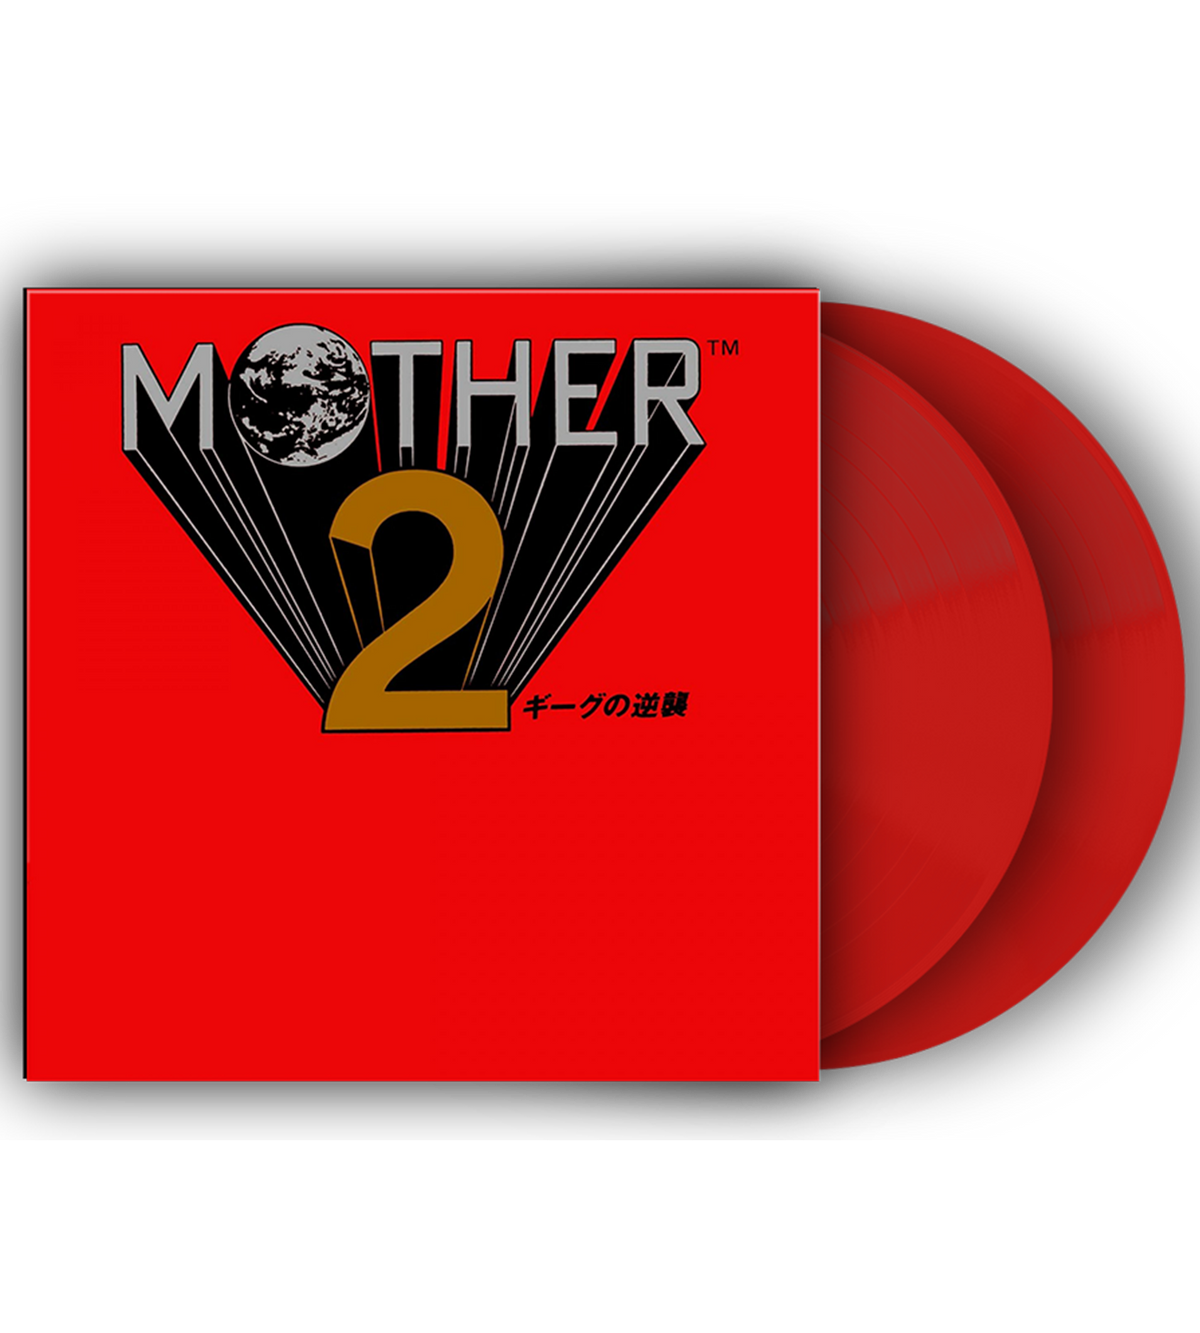 MOTHER 2 (EarthBound) Soundtrack Vinyl